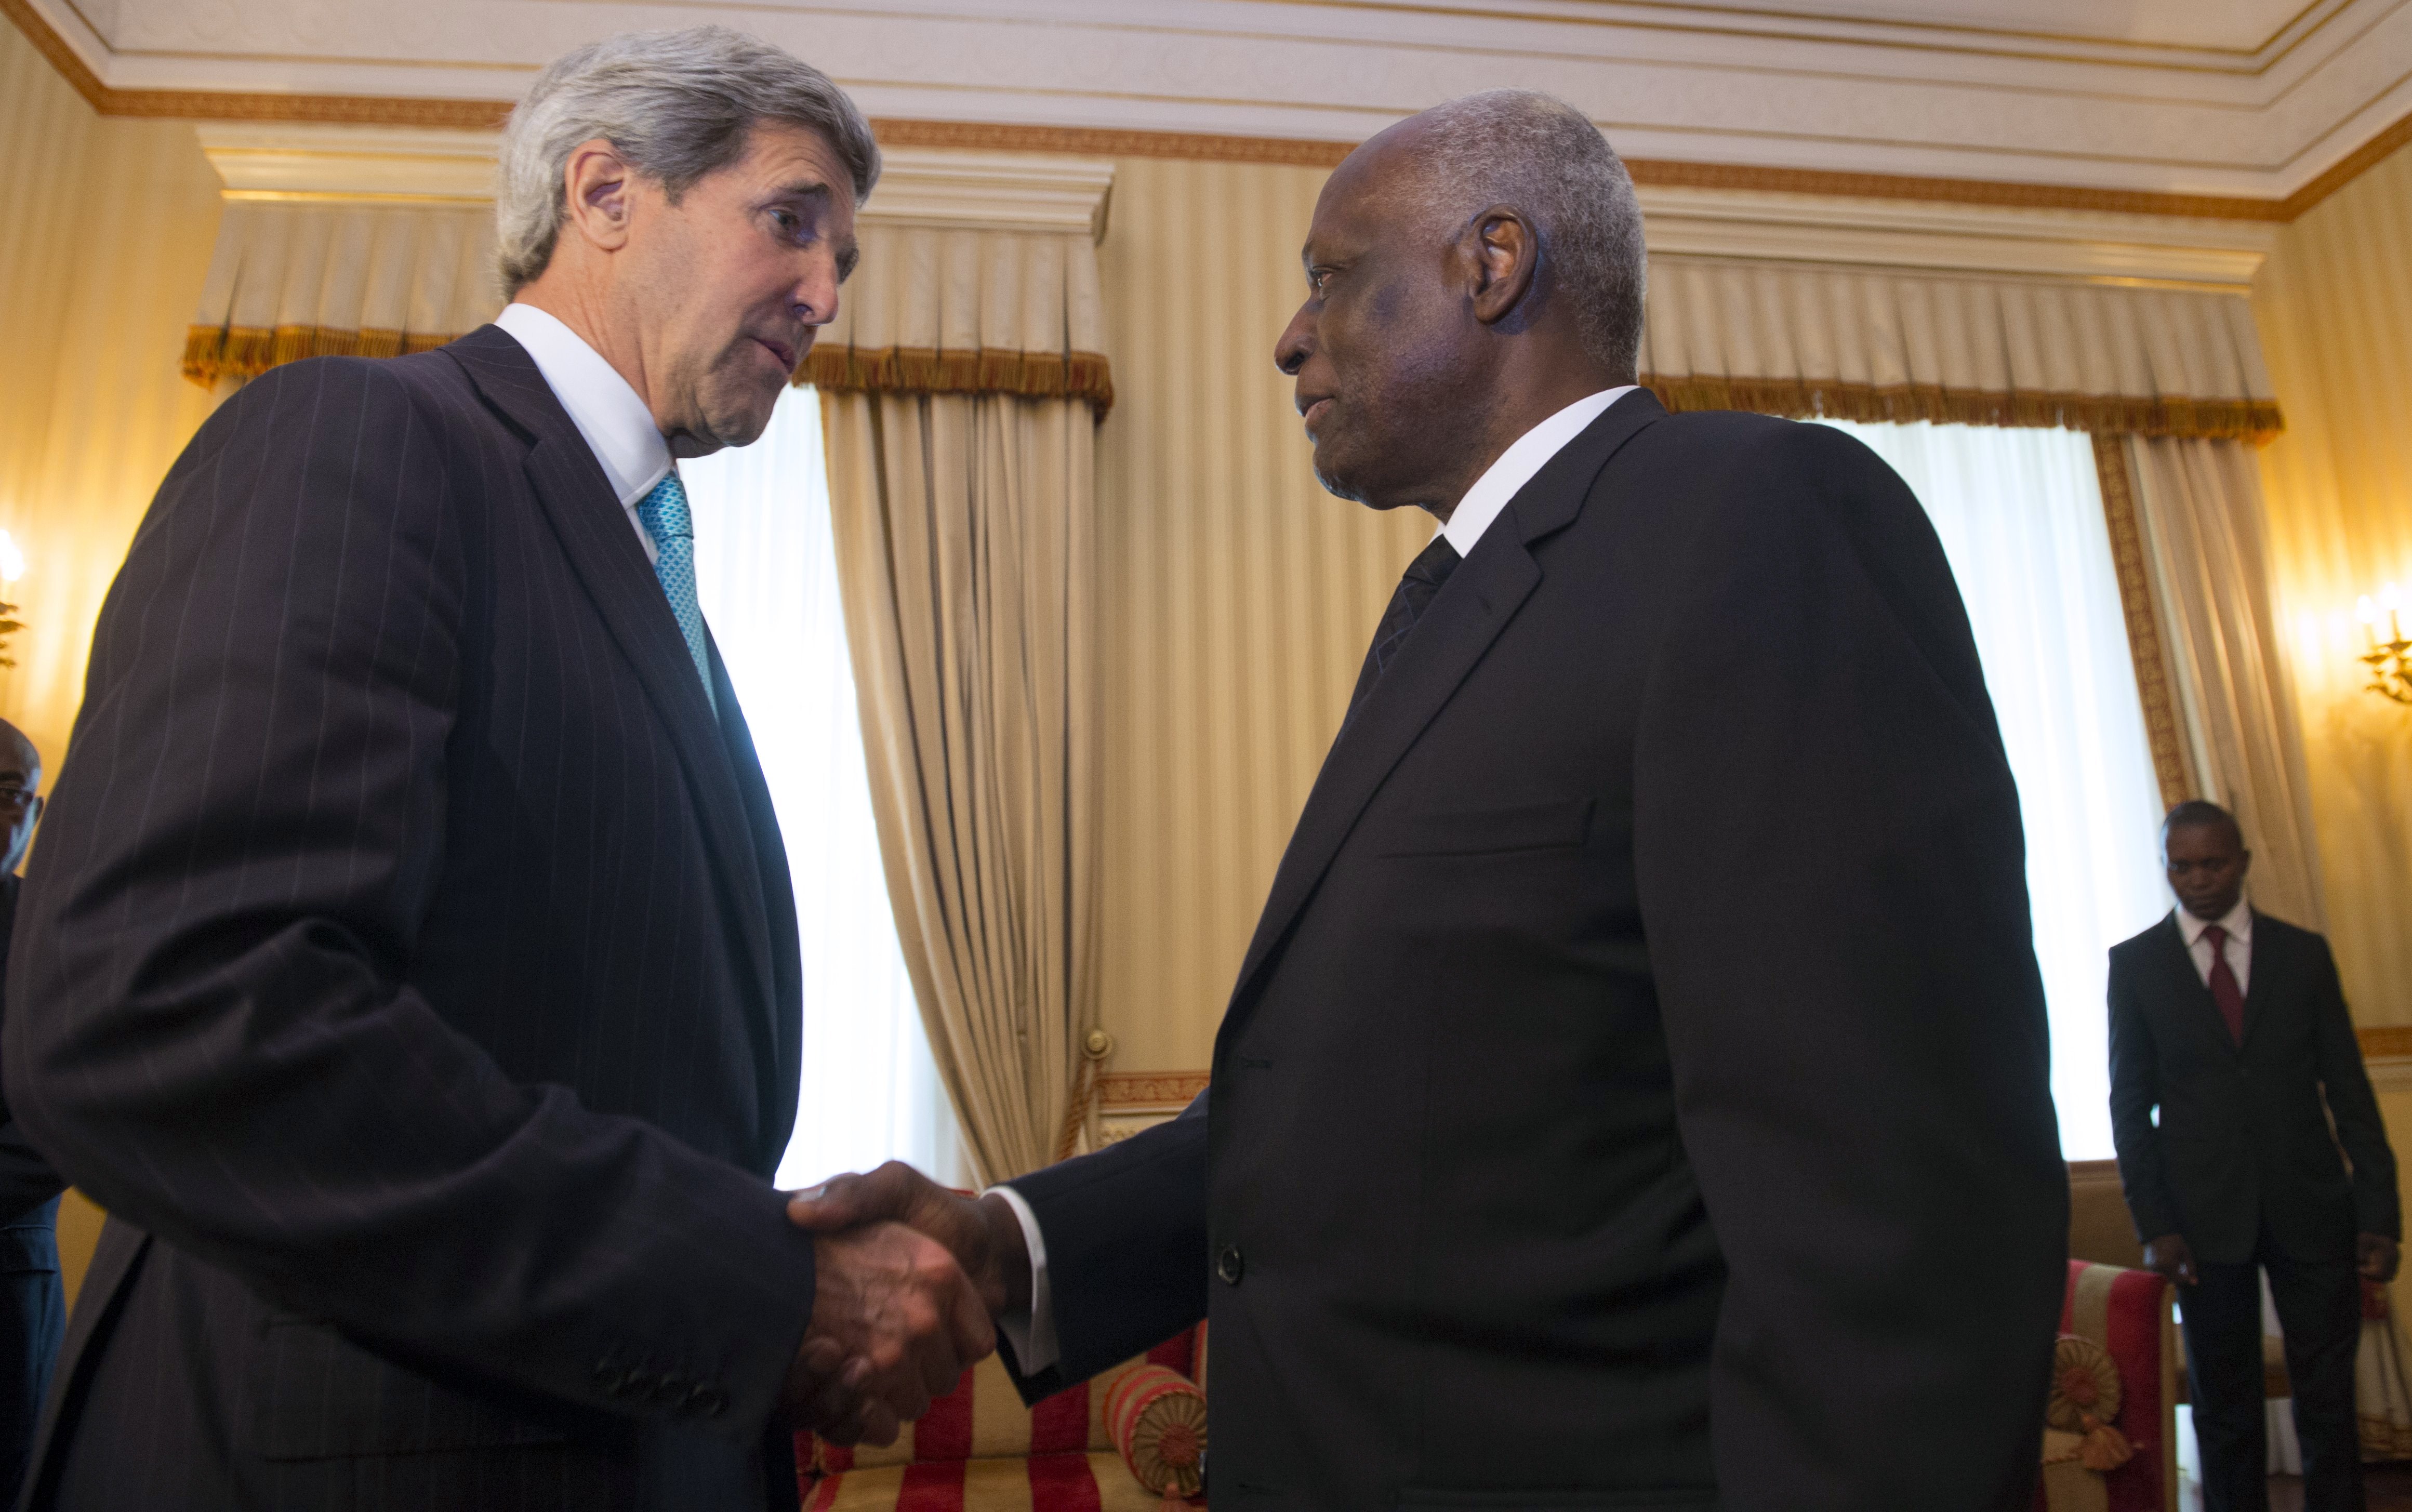 Angolan President Jose Eduardo dos Santos shakes hands with US Secretary of State John Kerry on May 5, 2014. SAUL LOEB/AFP/Getty Images